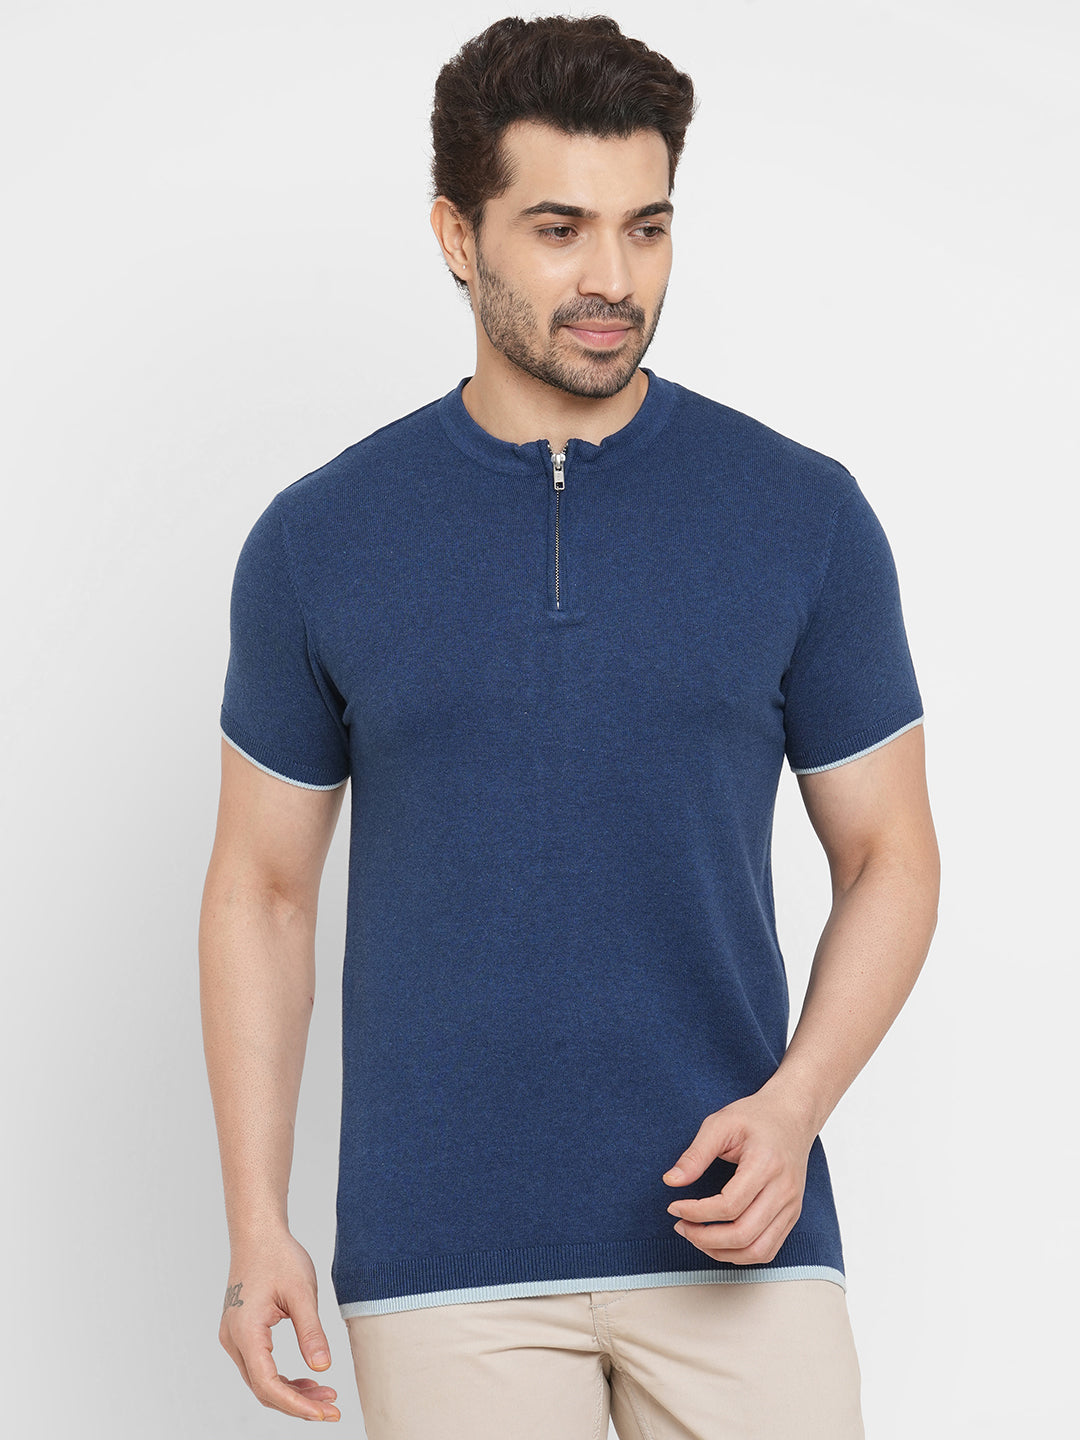 Men's Cotton Blend Navy Regular Fit Short Sleeved Tshirt